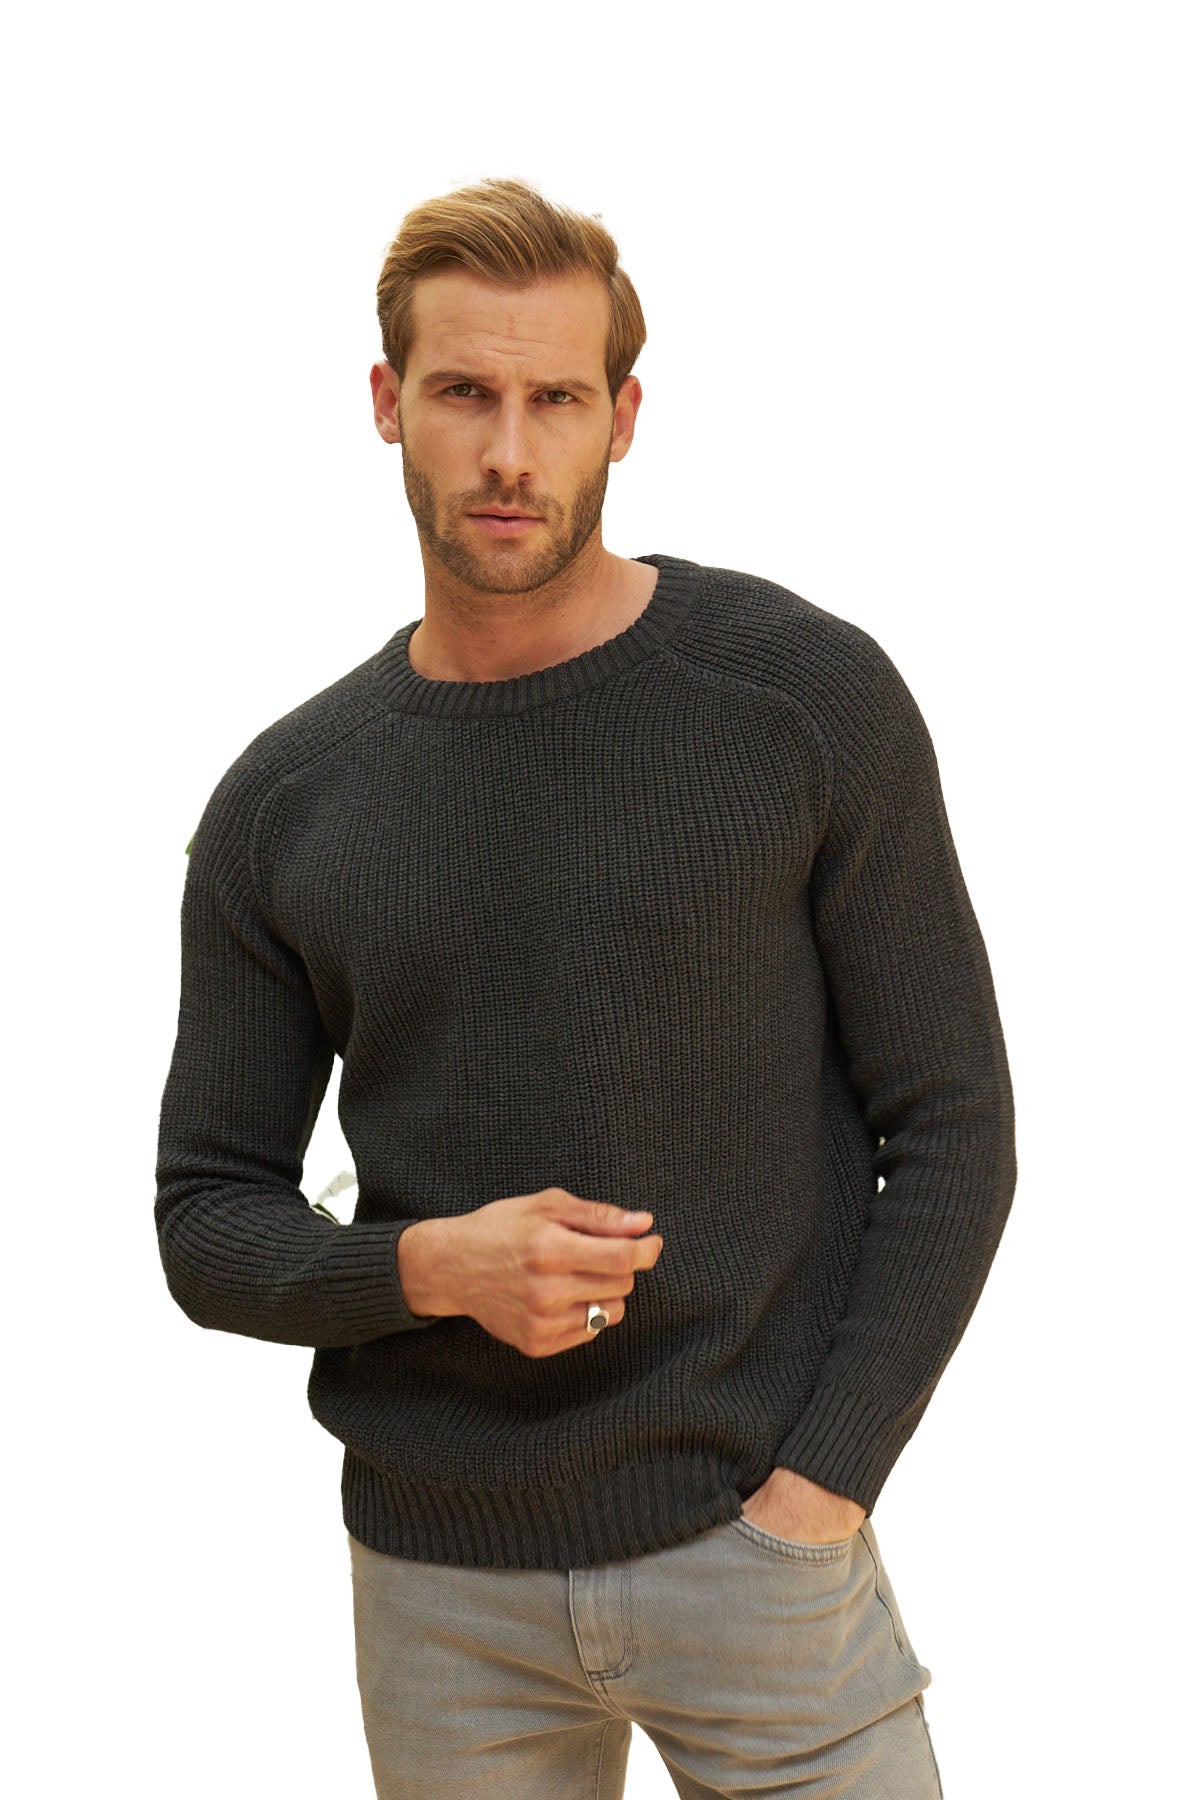 Men's Long Sleeve Crewneck Mid-Weight Pullover Sweater - Wear Sierra